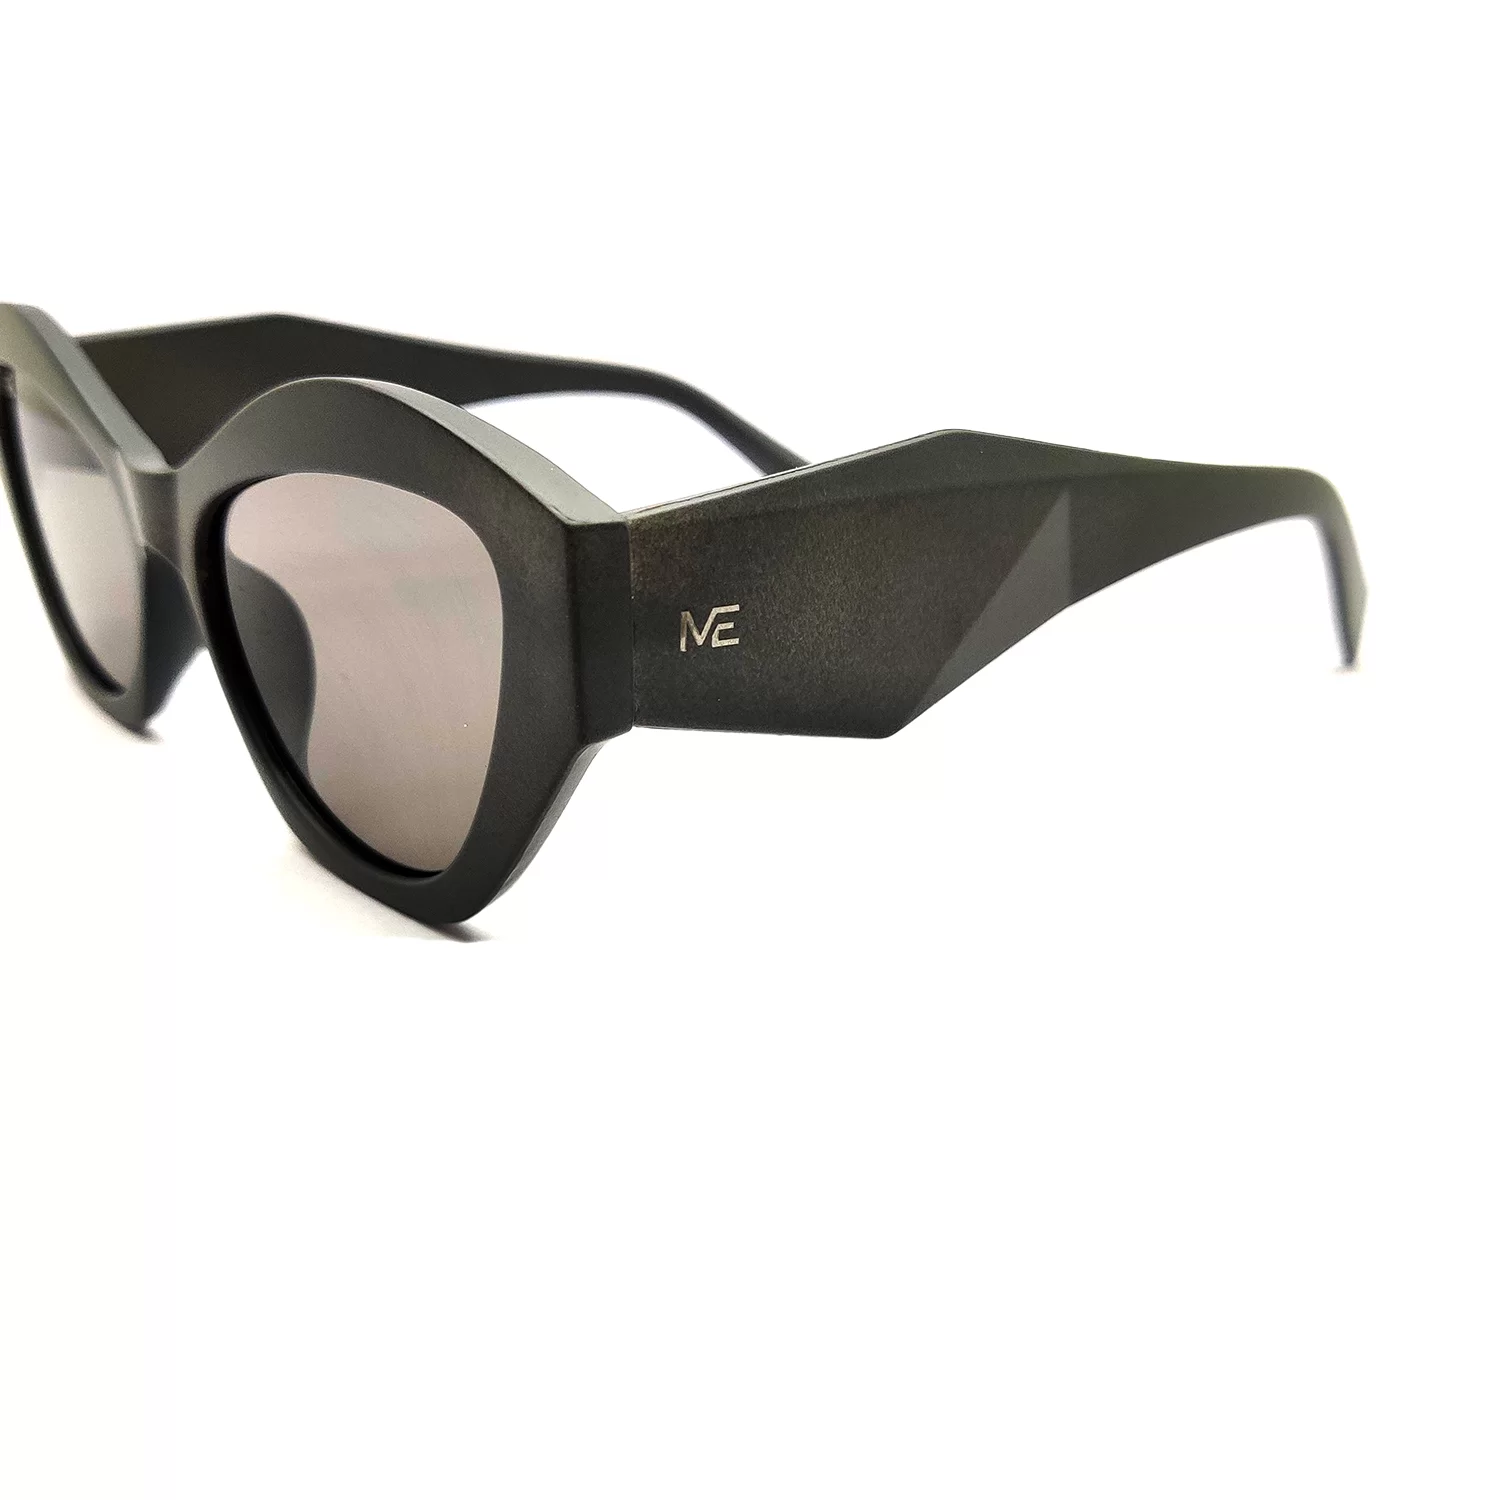 Buy Sheomy Unisex Combo offer pack of 4 shades glasses Black Candy MC stan  Rectangle Retro Vintage Narrow Sunglasses Women:Men Small Narrow Square Sun  Glasses Combo offer pack of 4 B083F4N825 at